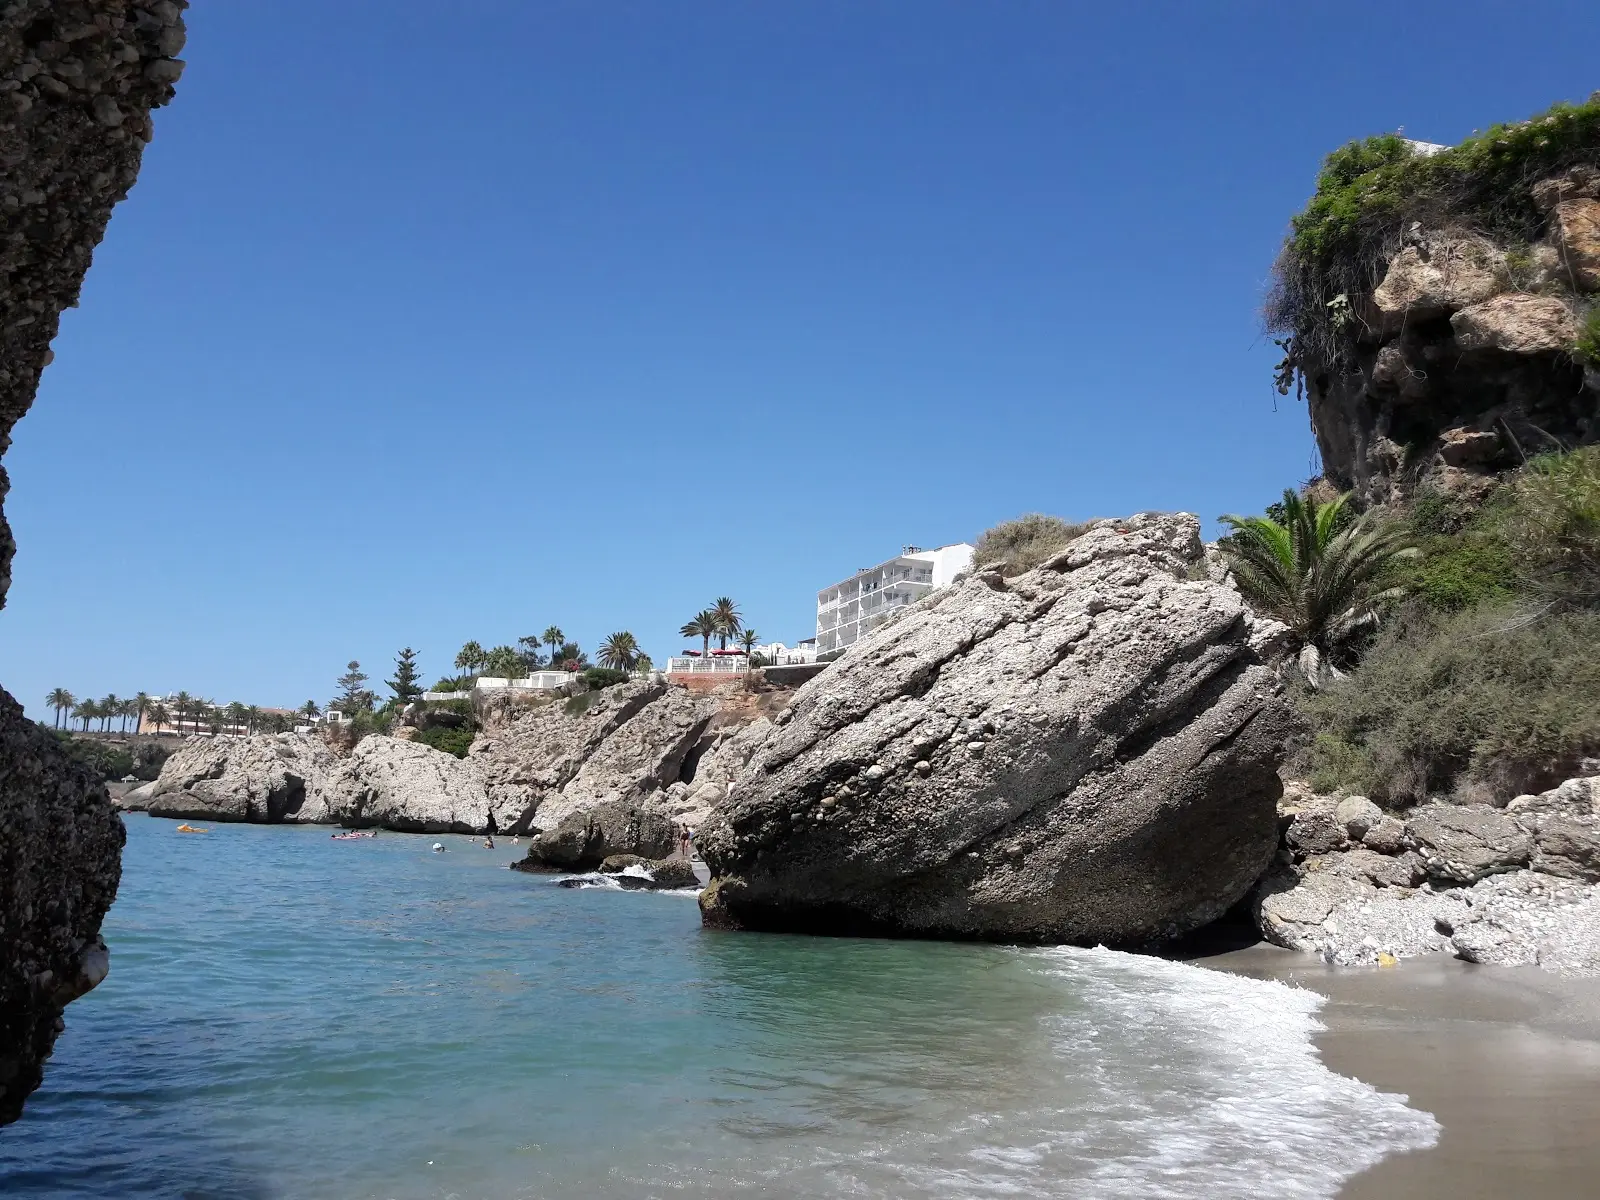 Nature-immersed atmosphere at Playa el Chorrillo